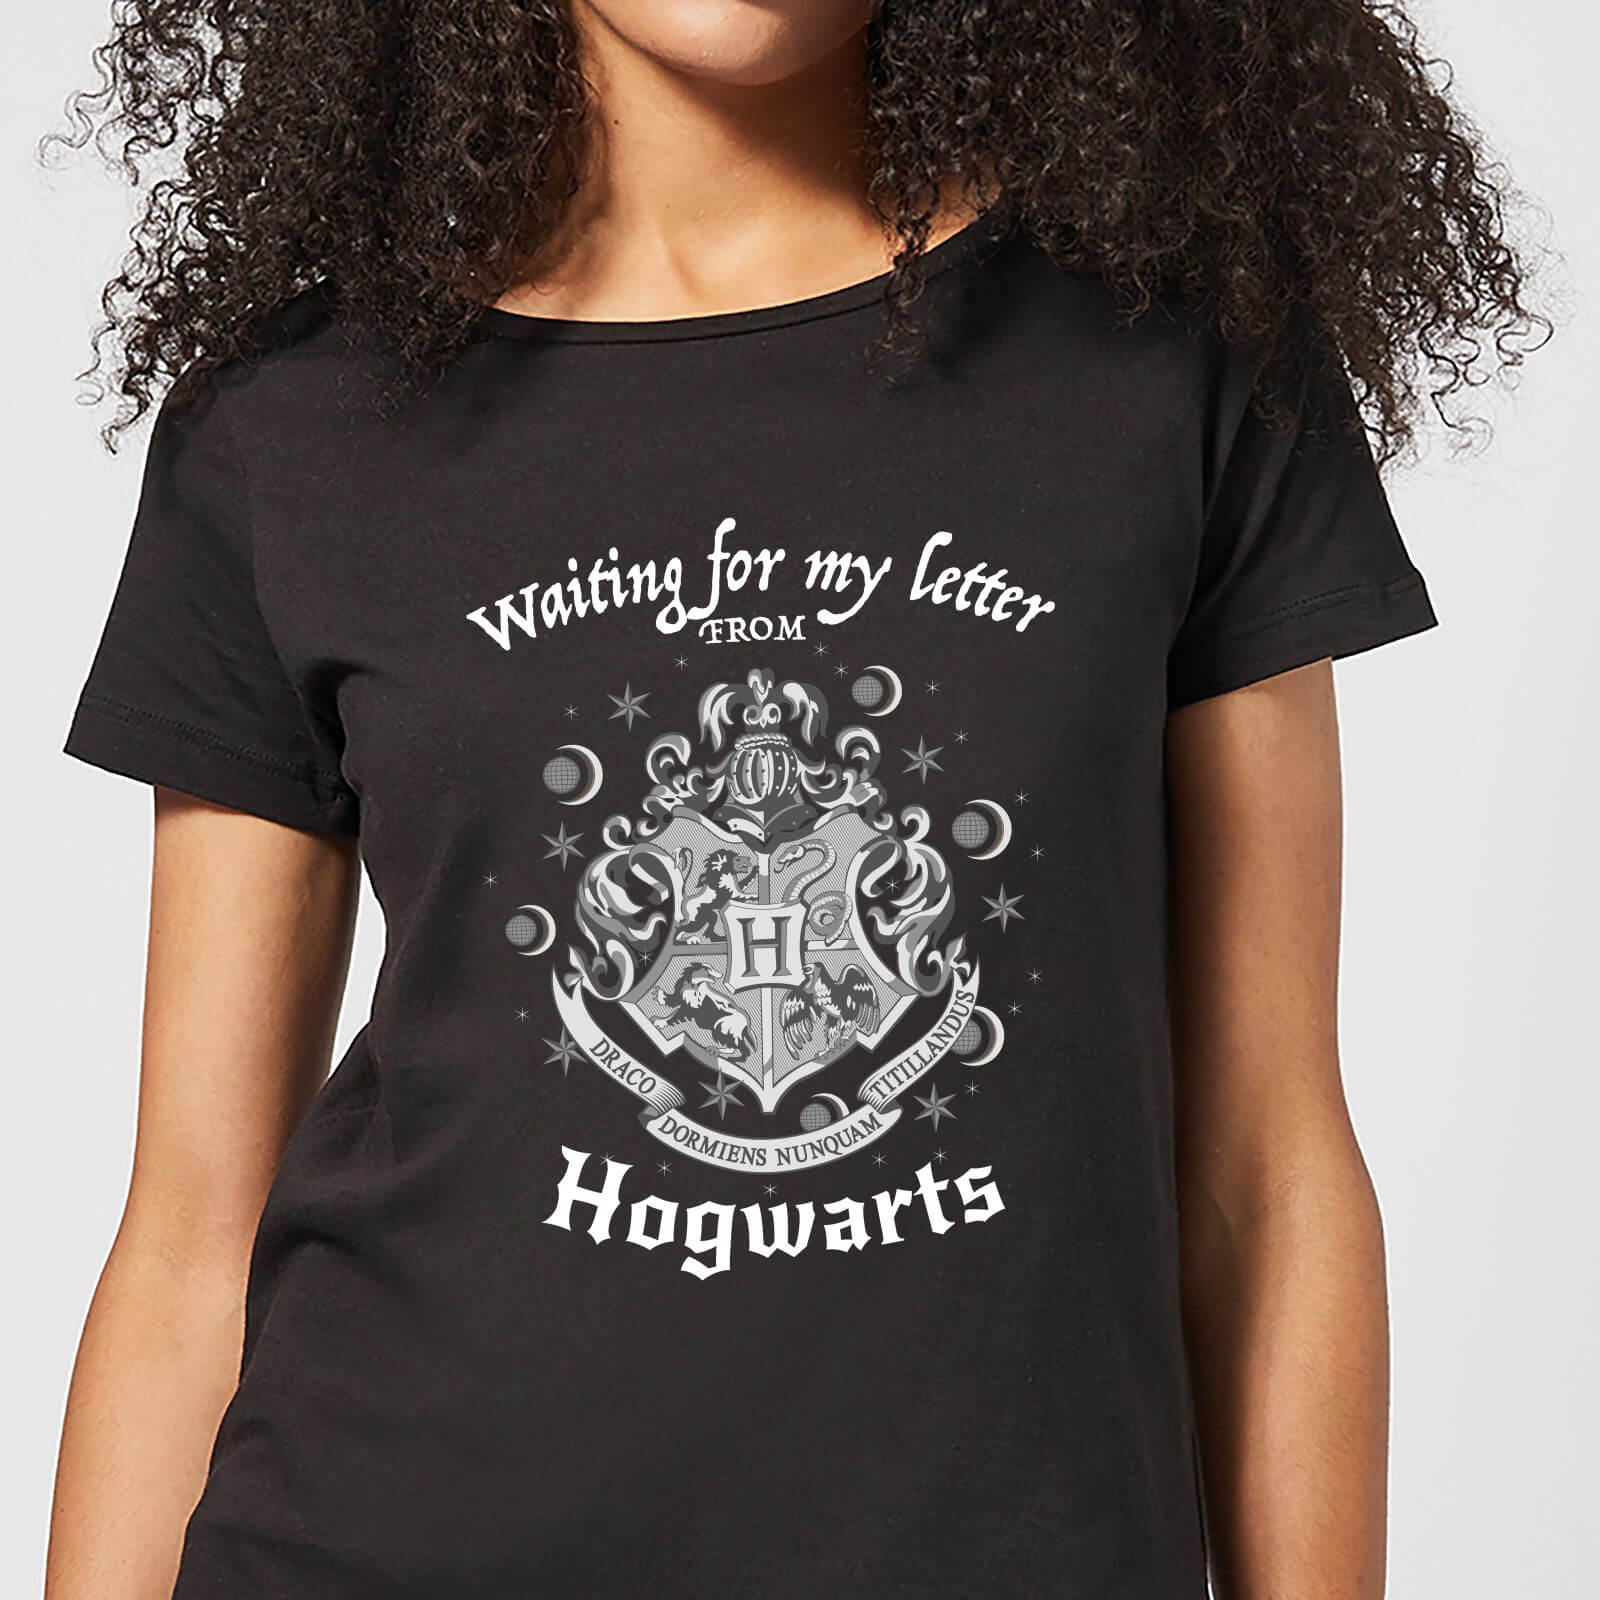 Harry Potter Waiting For My Letter From Hogwarts Women's T-Shirt - Black - 3XL - Black